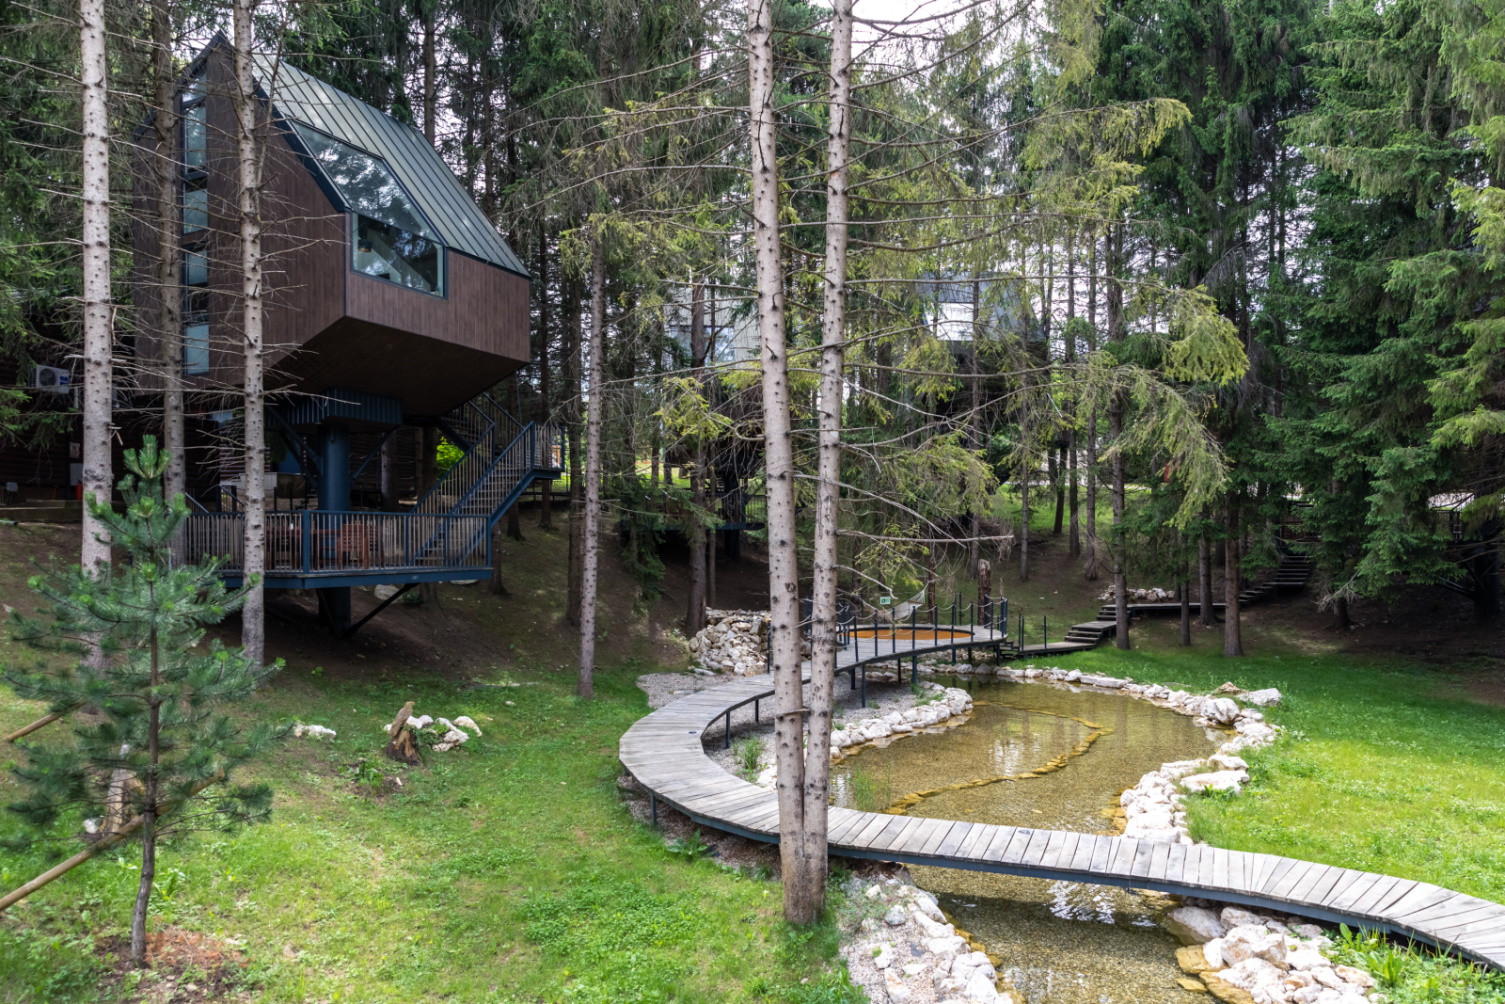 Extravagant info: Plitvice Holiday Resort